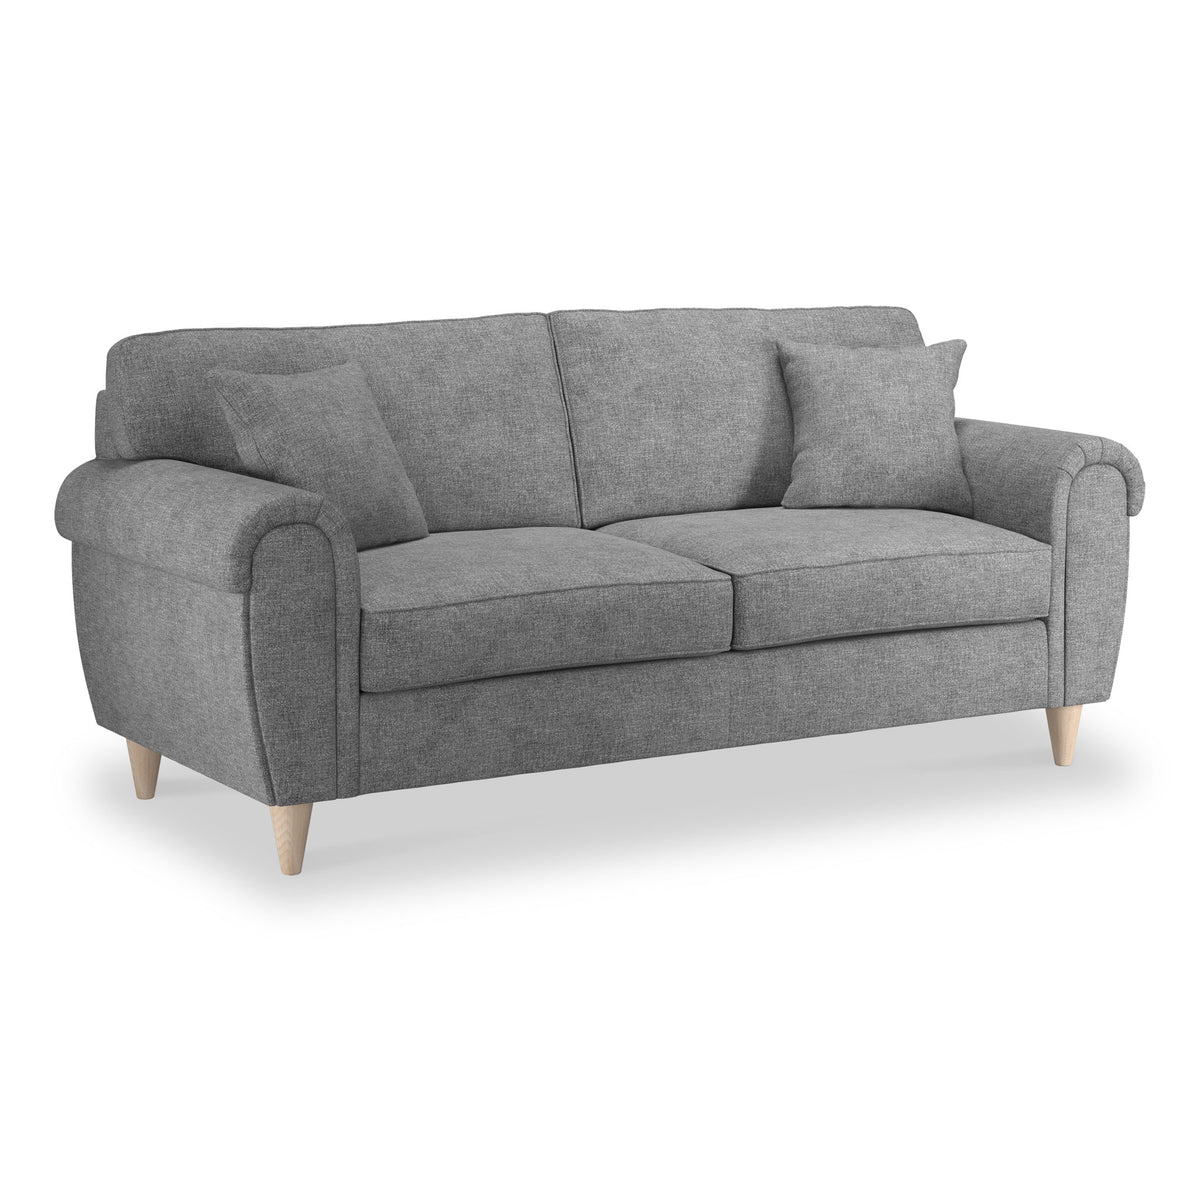 Harry Dark Grey 3 Seater Sofa from Roseland Furniture